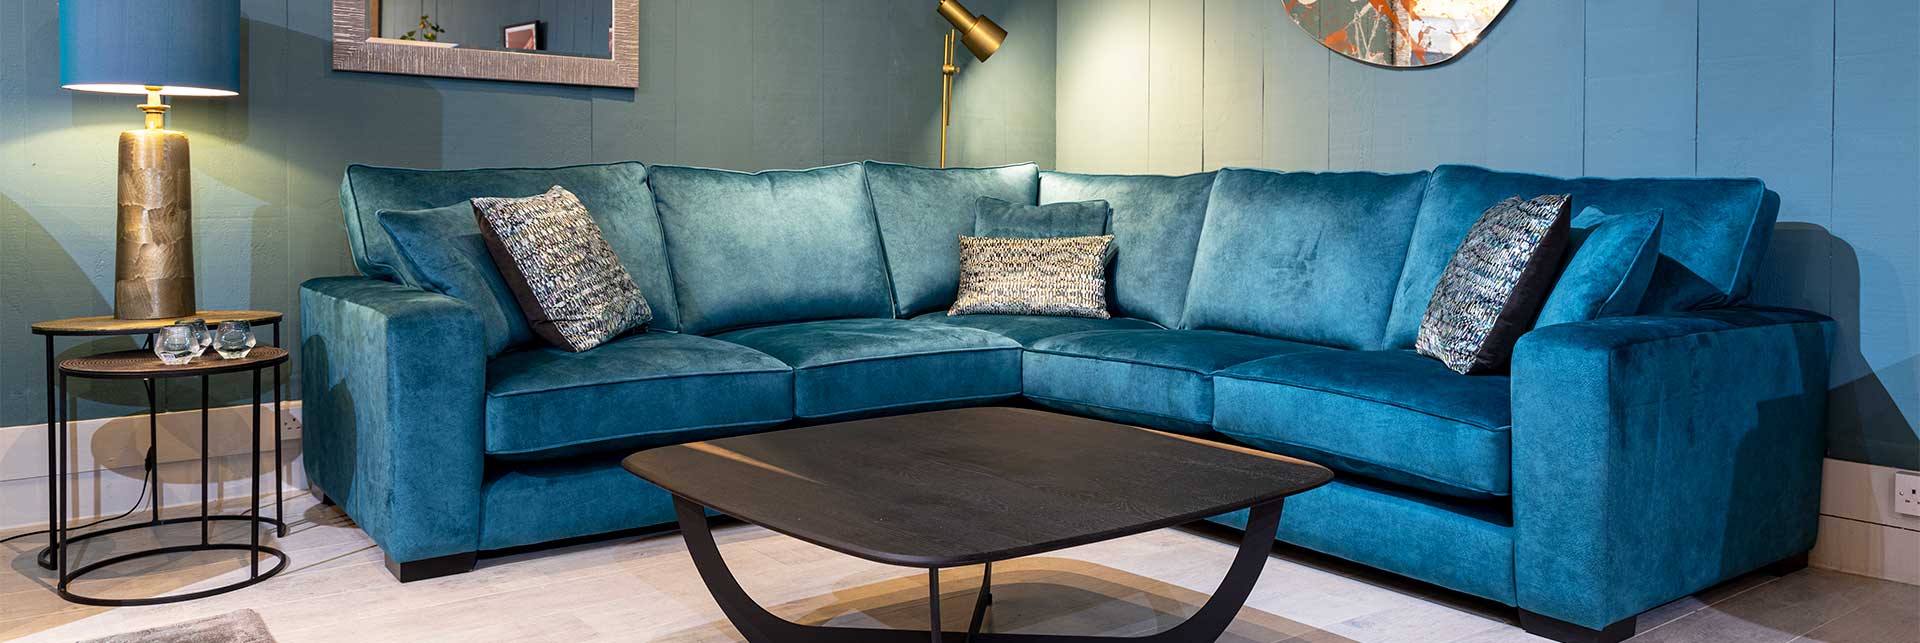 Lexington large bespoke corner sofa in Aquaclean blue luxury velvet fabric